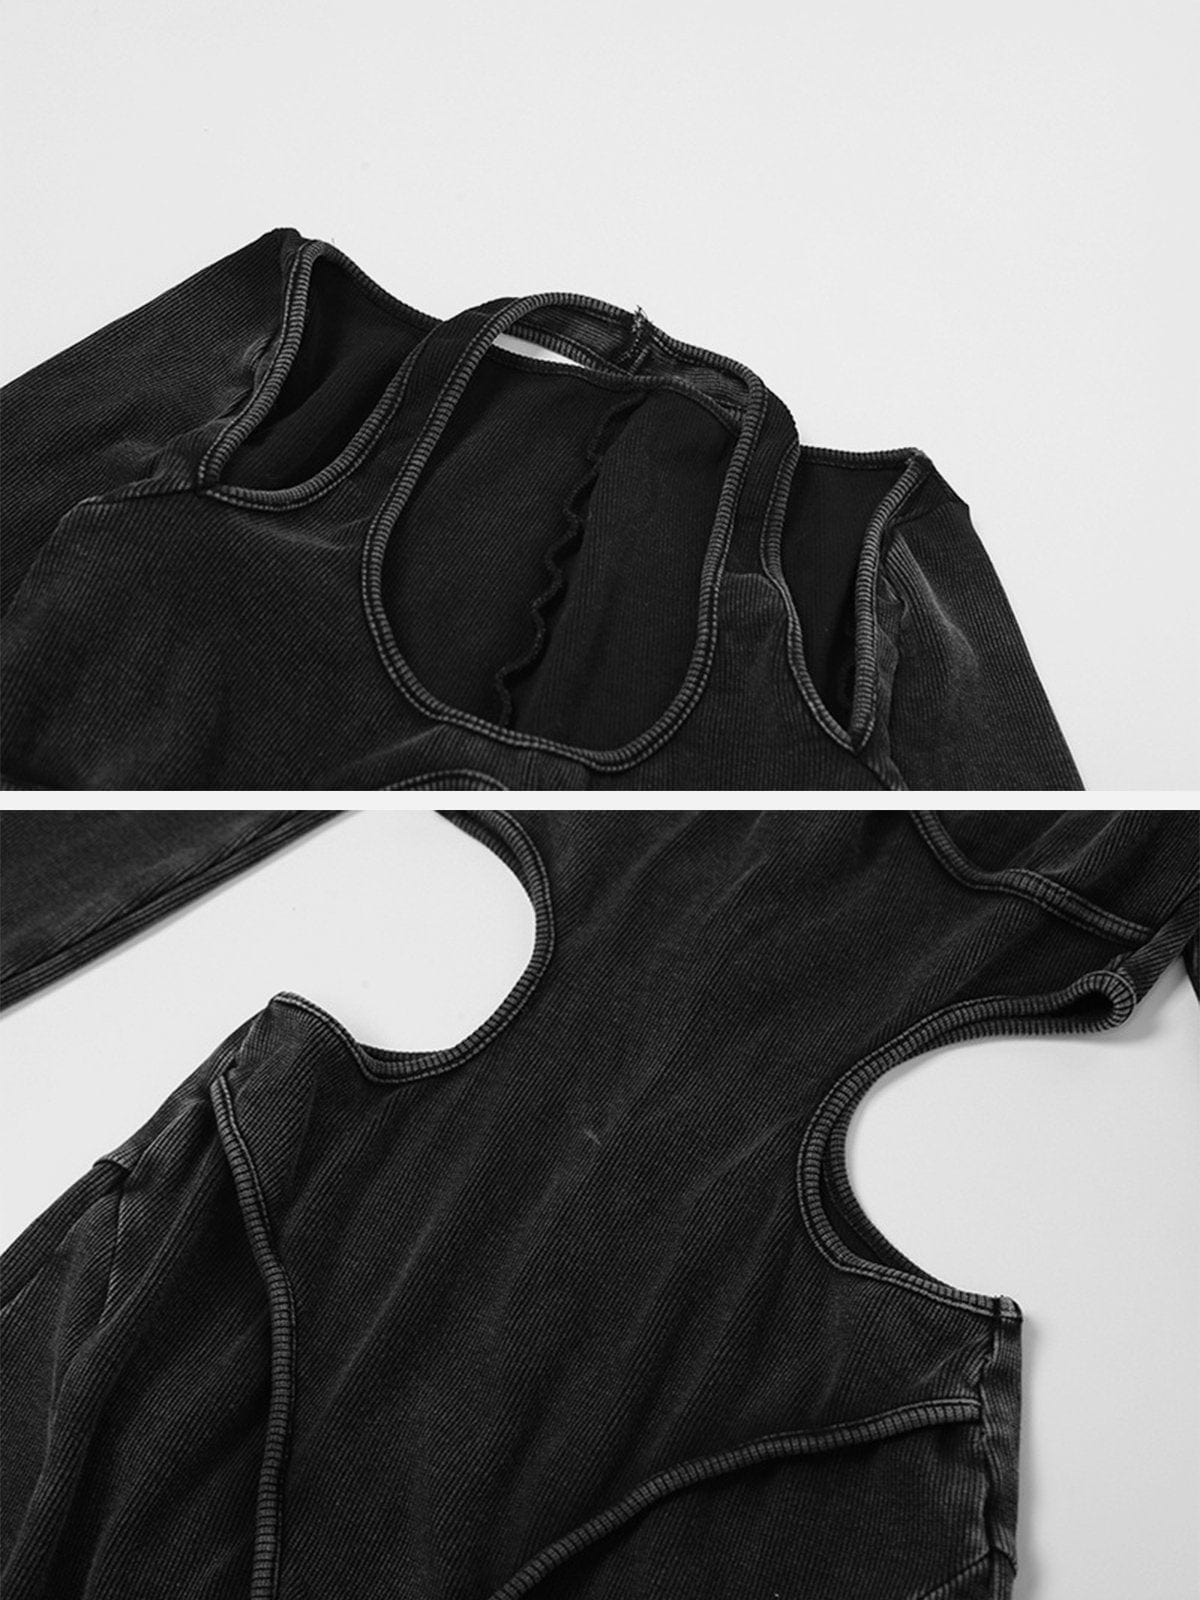 NEV Halterneck Low Neck Cutout Long Sleeve Bodysuit